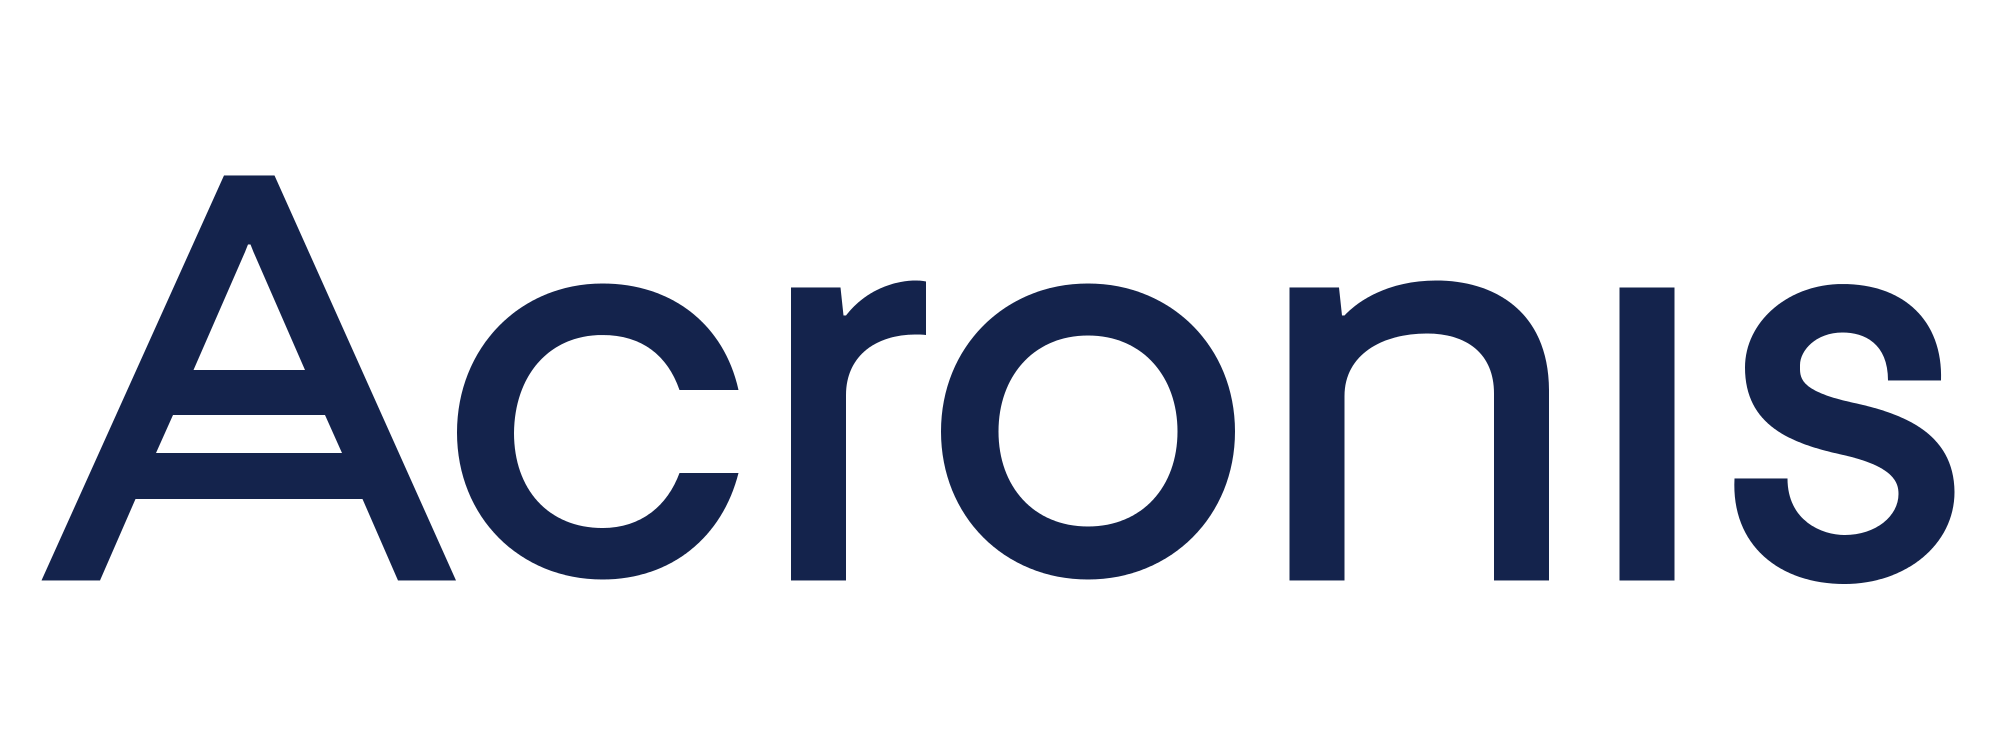 Acronis Logo - Acronis.svg